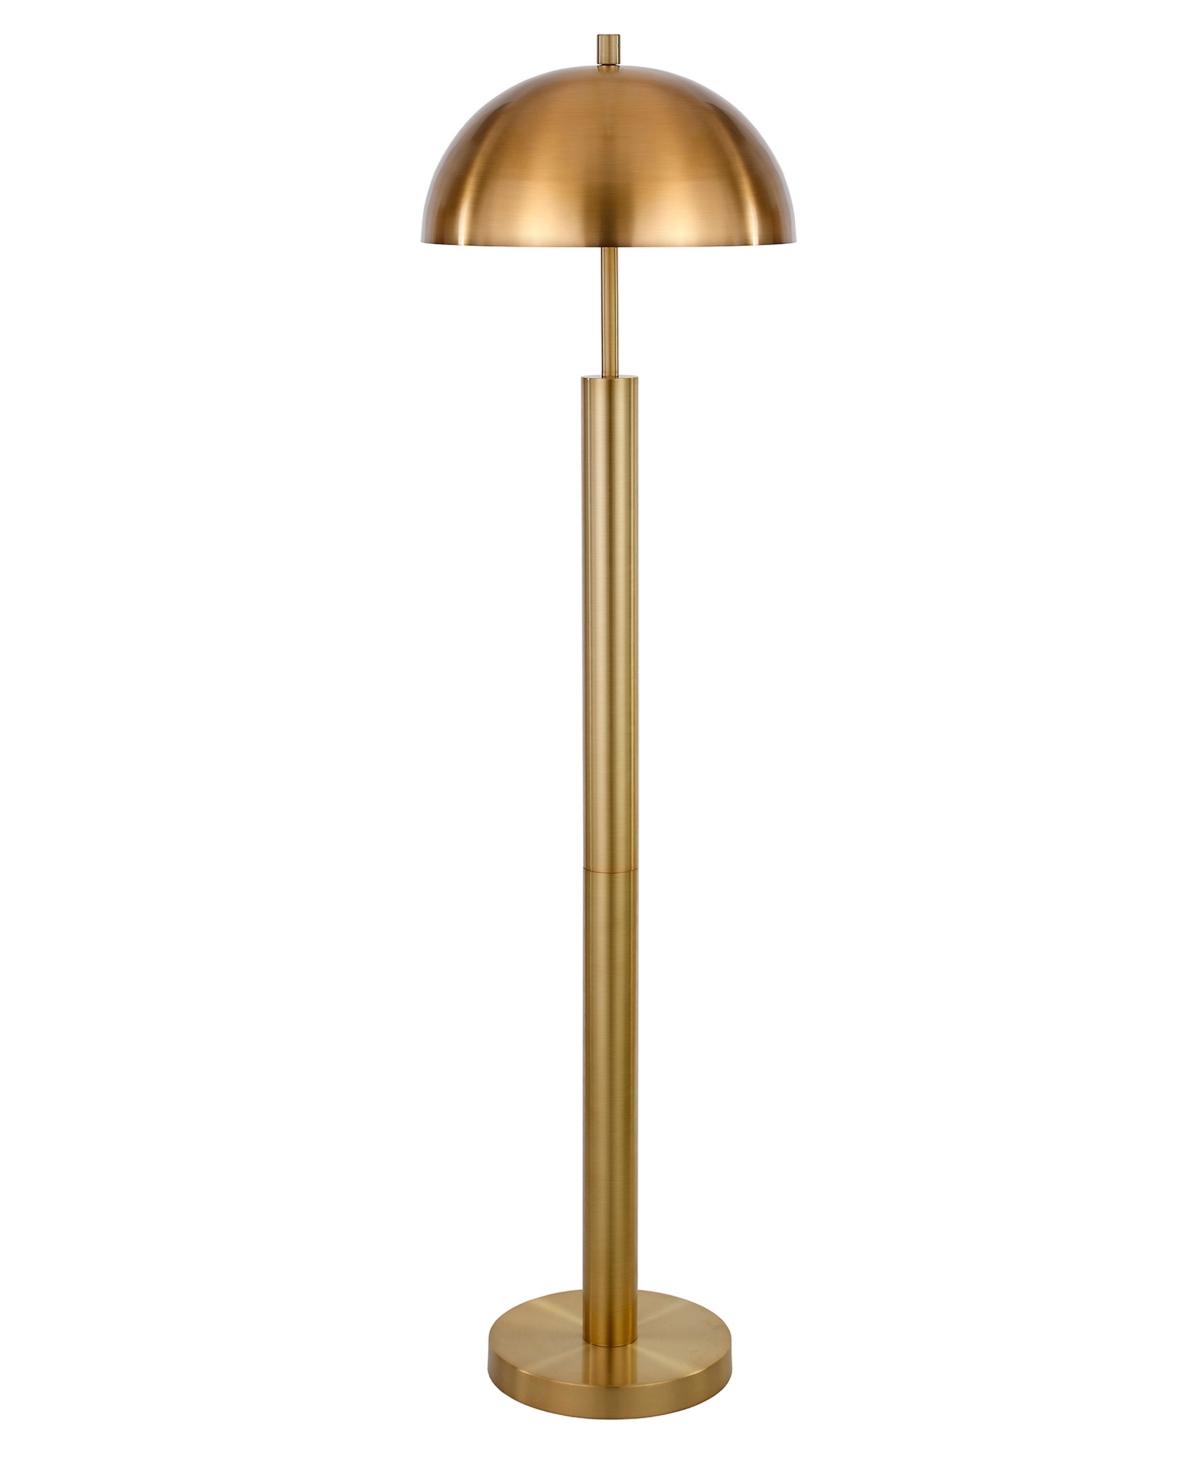 & Canal York Finish Floor Lamp & Reviews - All Lighting - Home Decor - Macy's